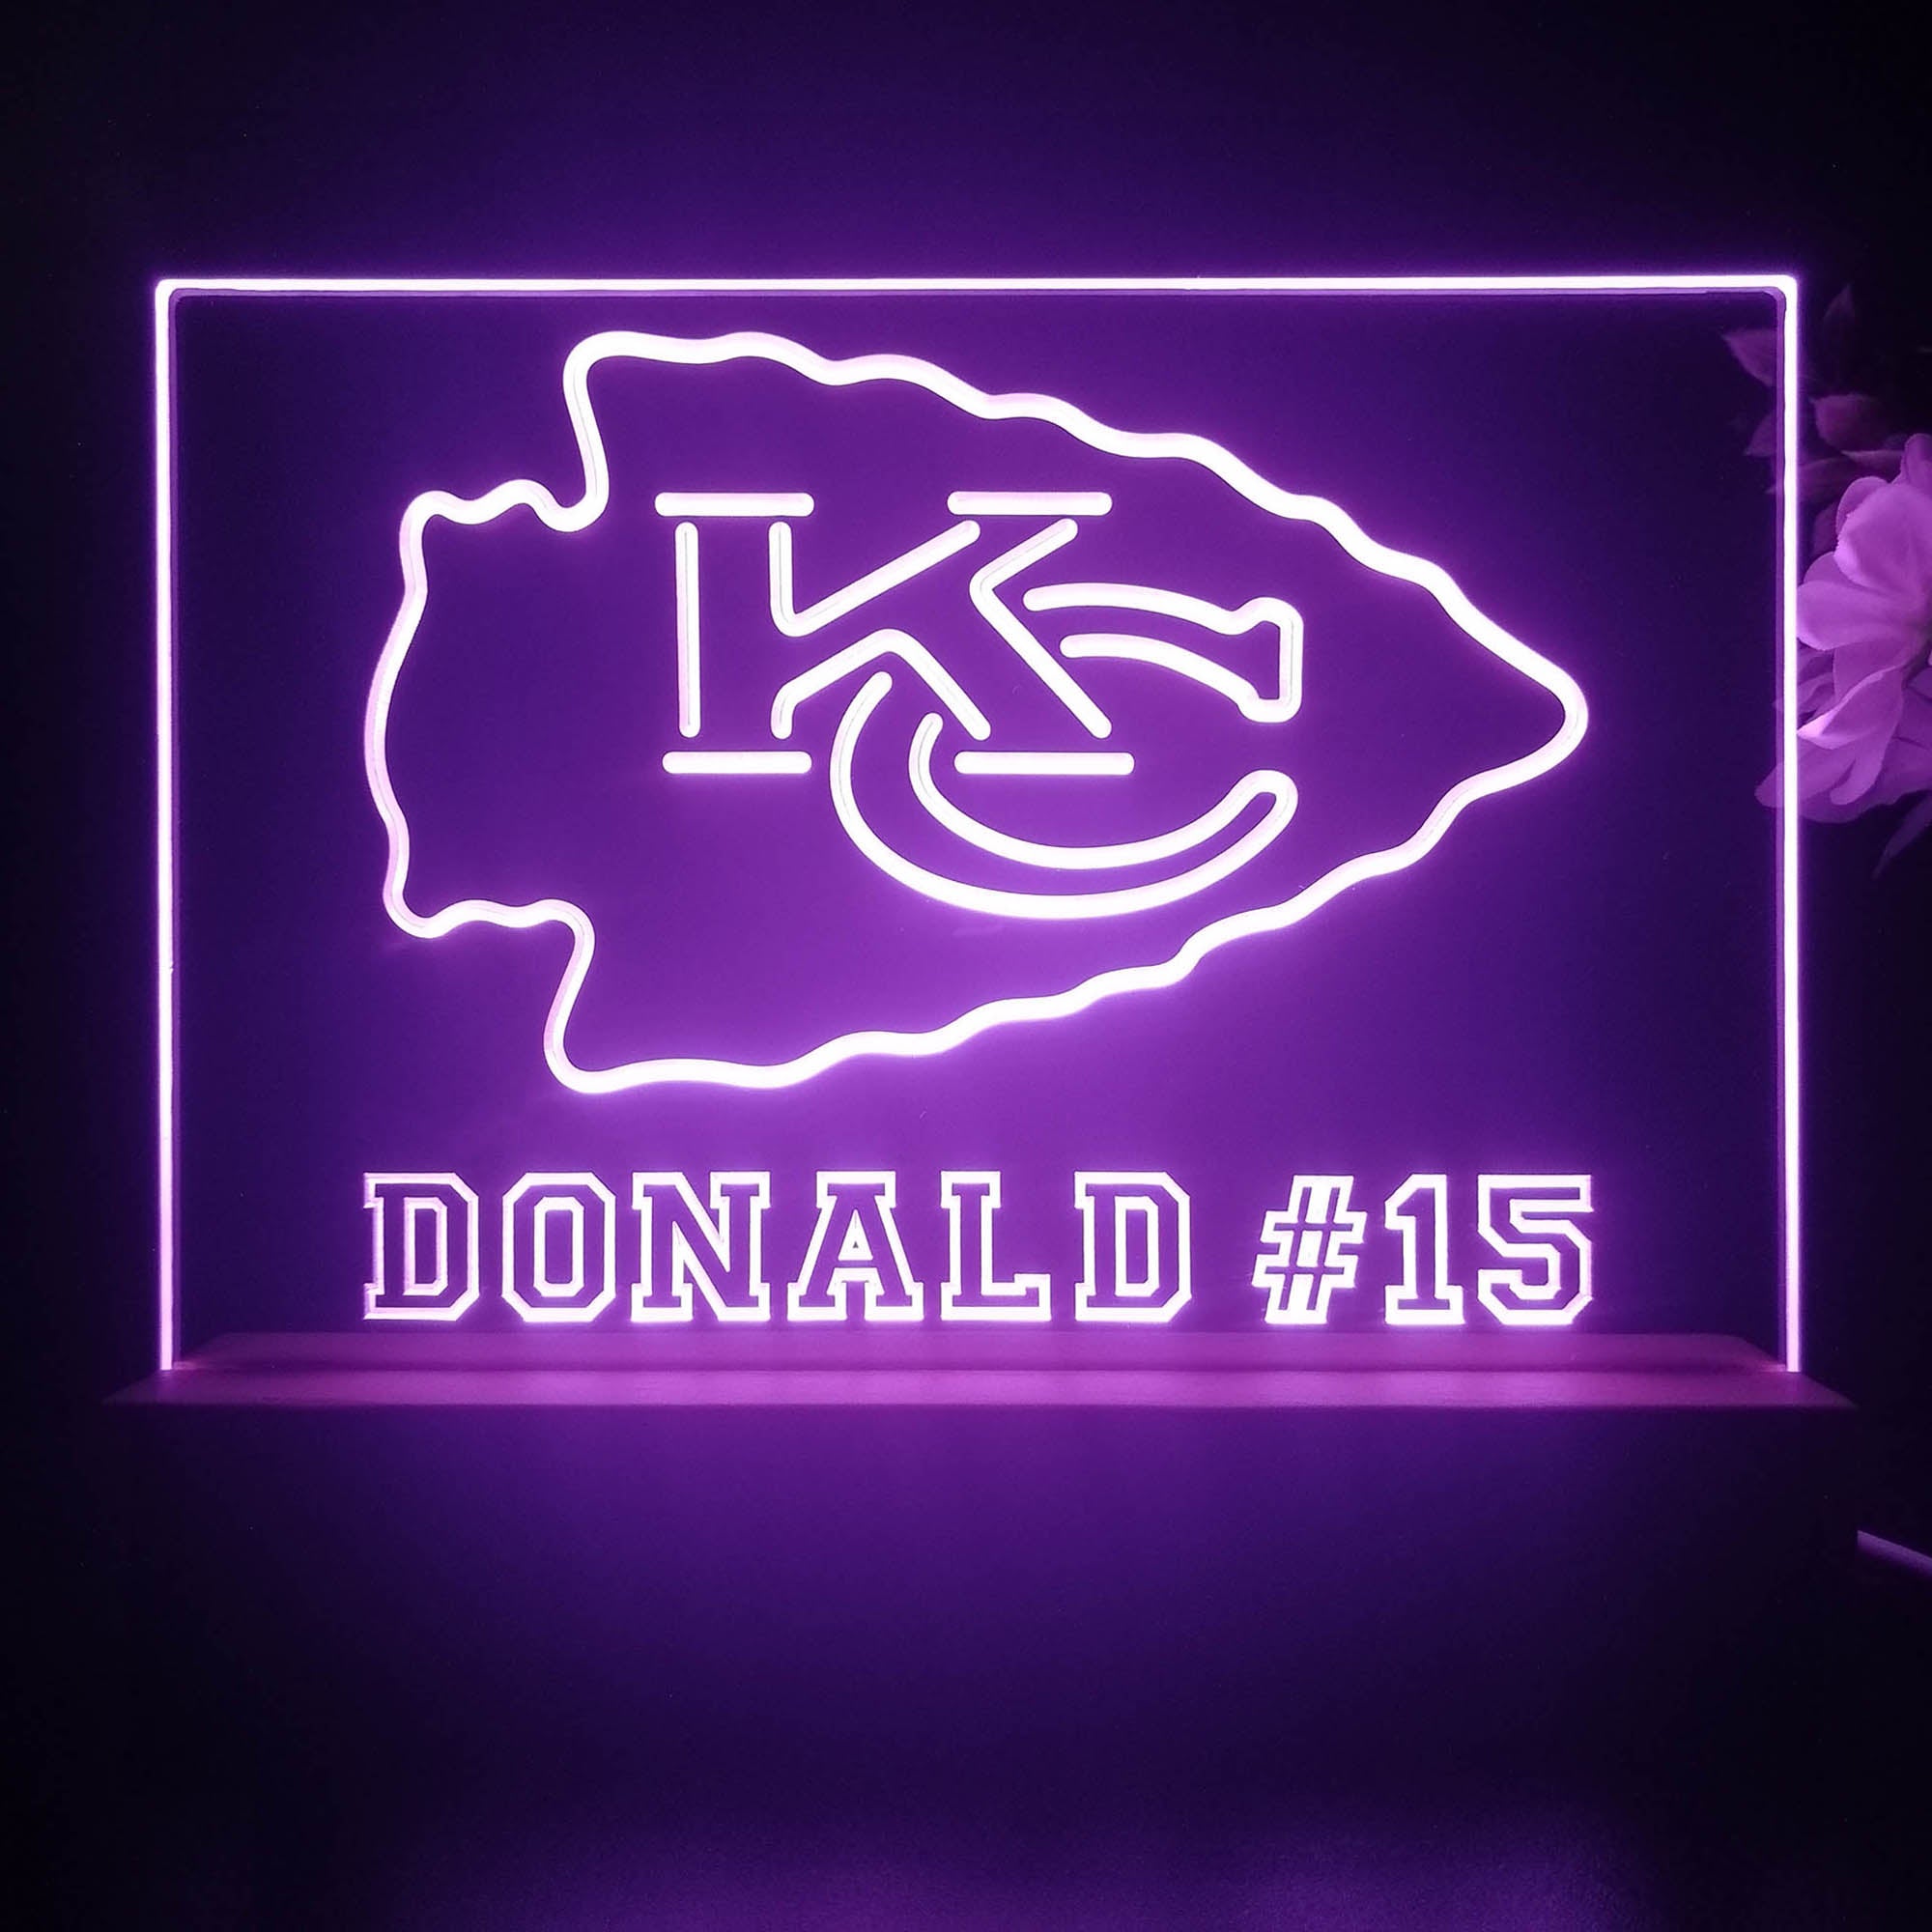 Personalized Kansas City Chiefs Souvenir Neon LED Night Light Sign